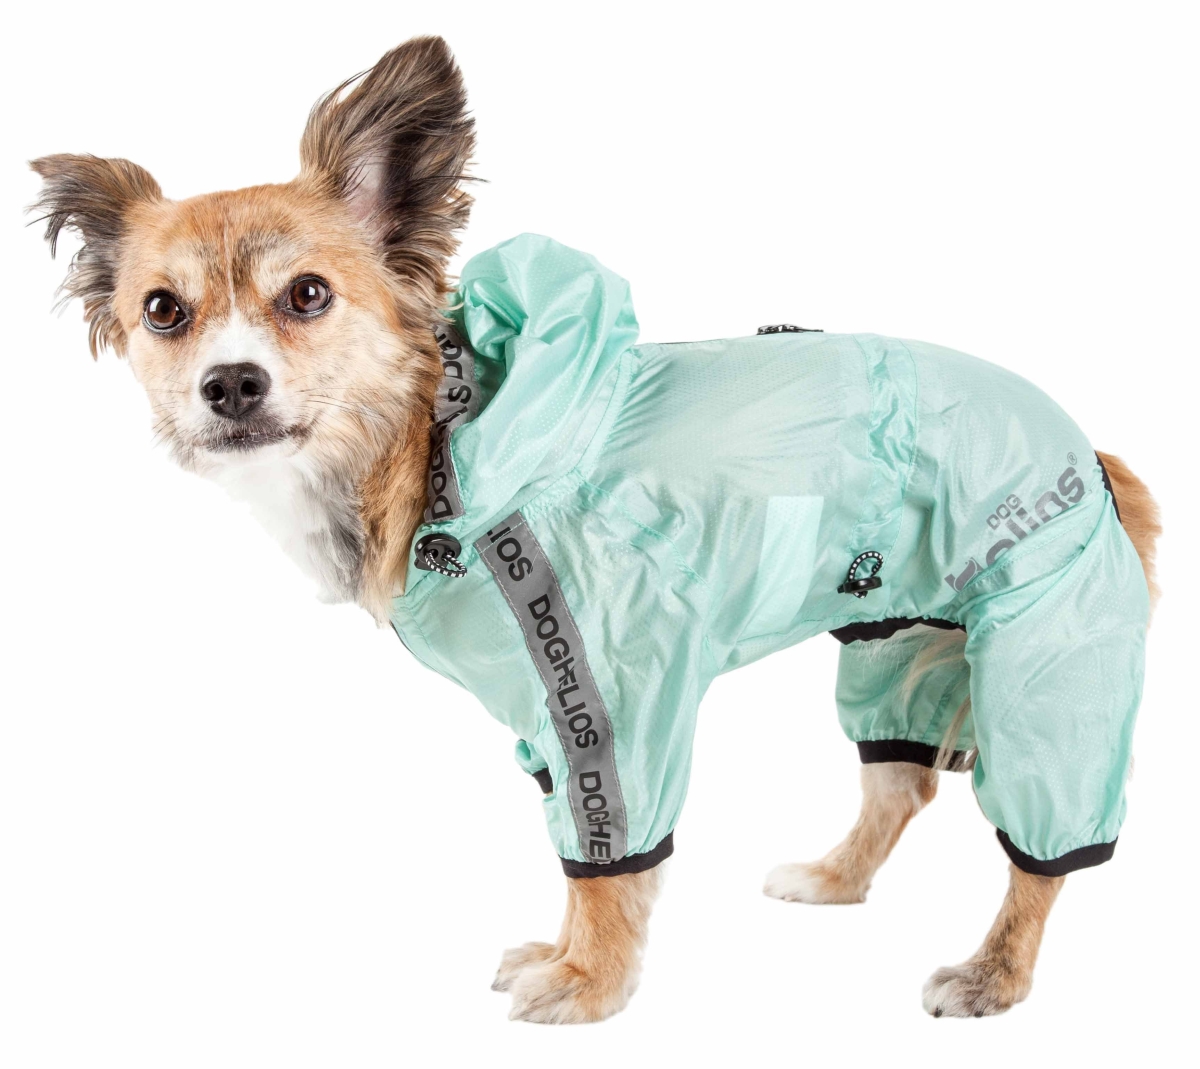 R8aqsm Torrential Shield Waterproof Multi-adjustable Full Bodied Pet Dog Windbreaker Raincoat - Aqua Blue, Small